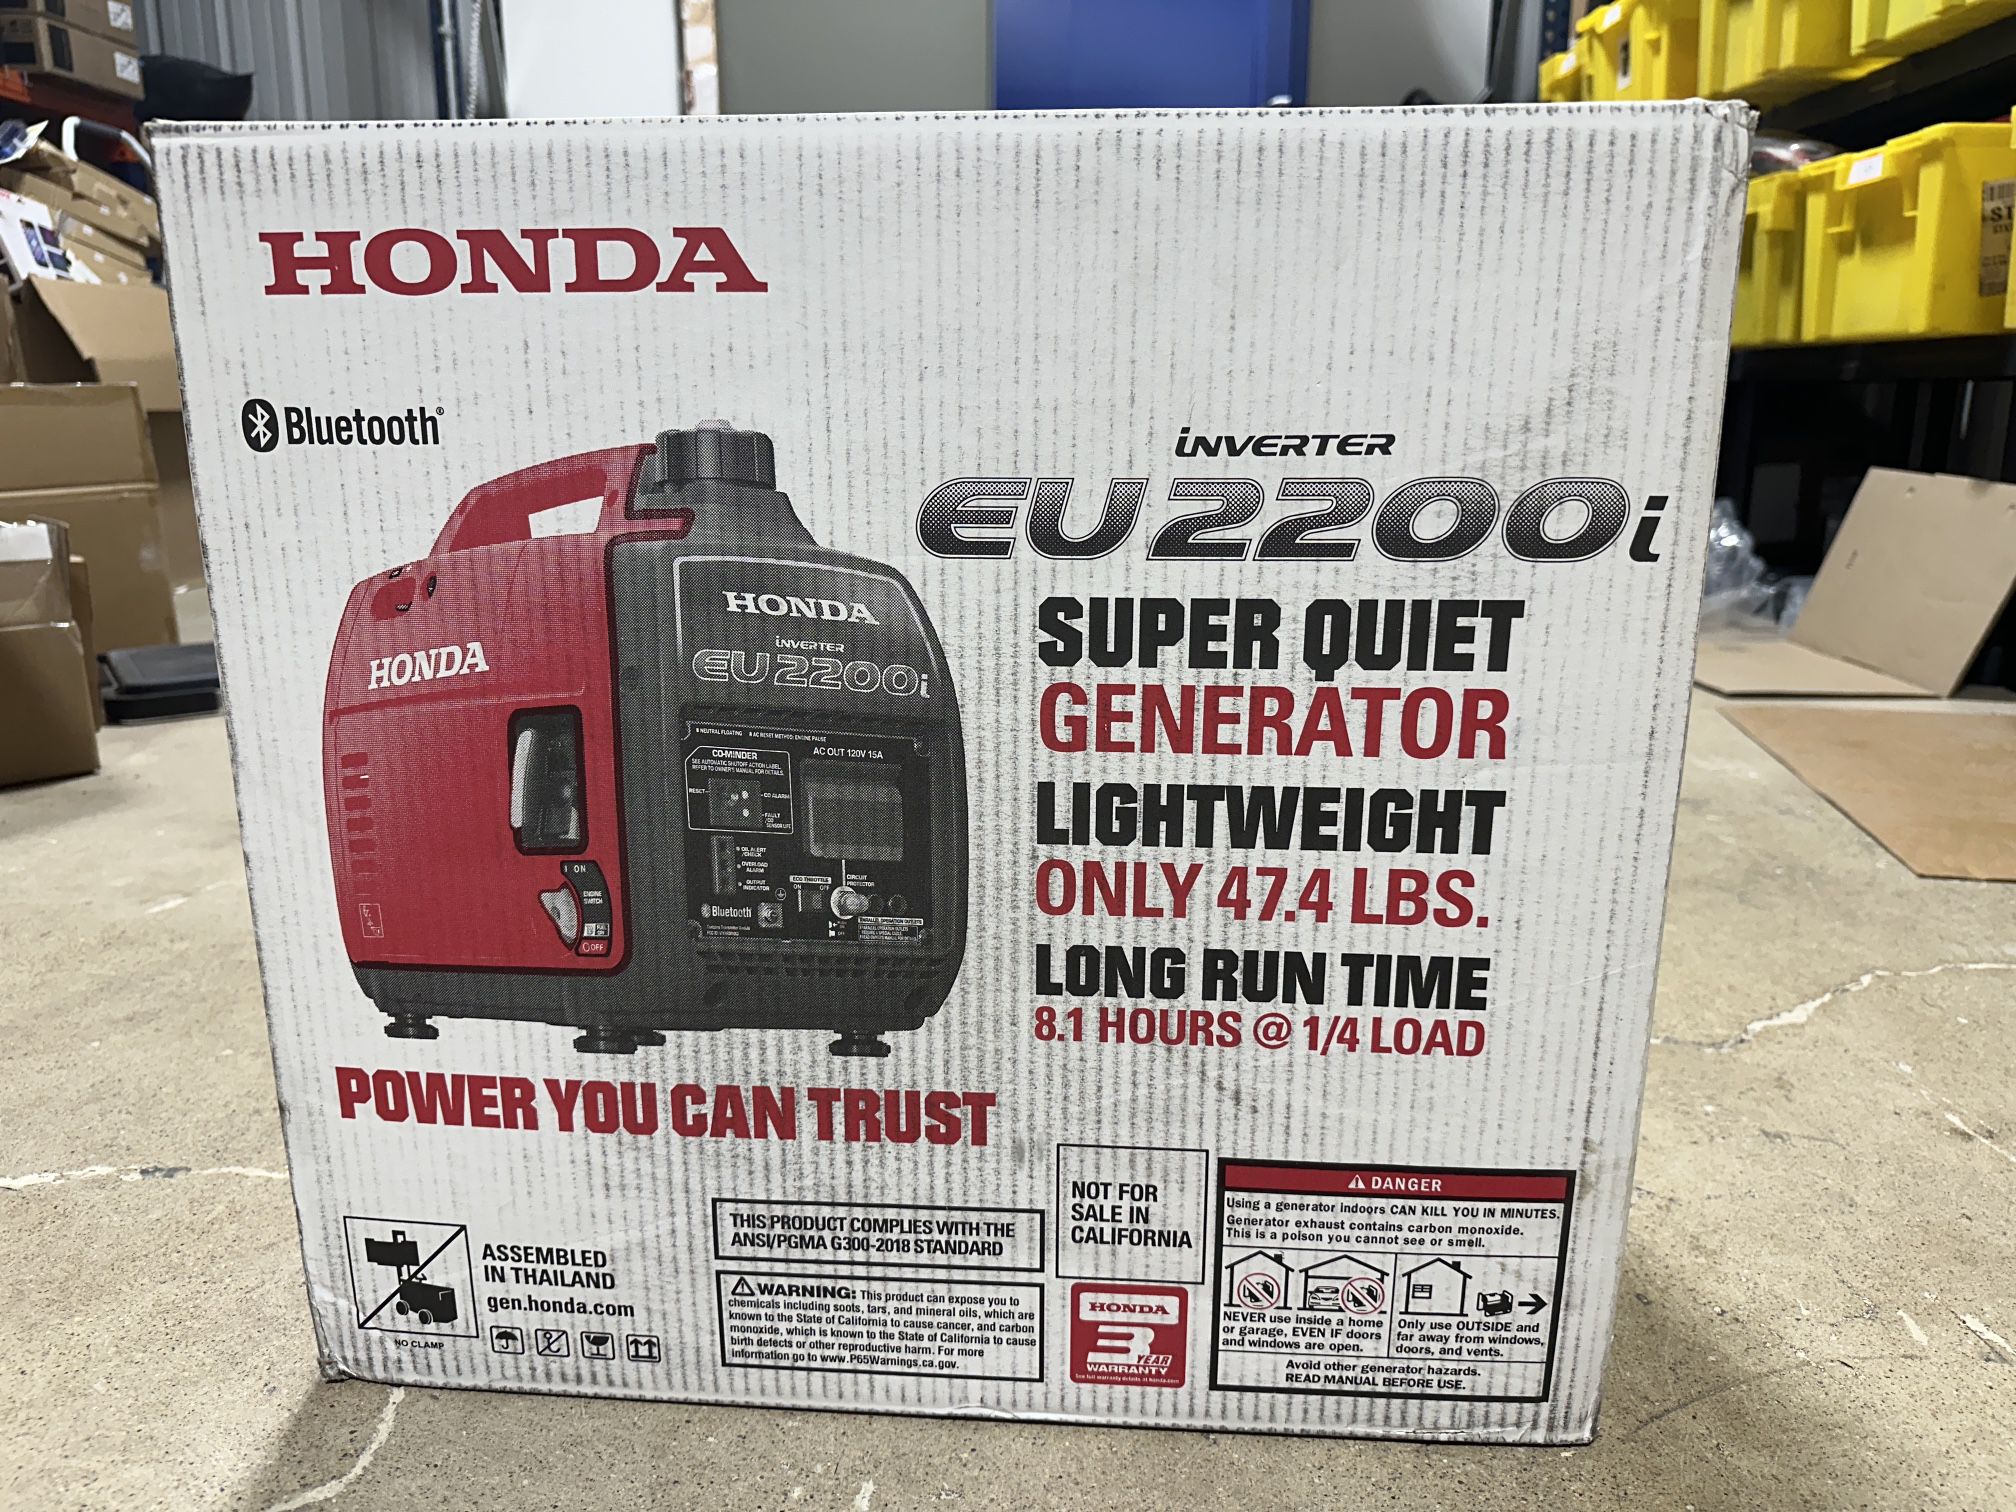 [Brand New] Honda Generator EU2200i with Bluetoth